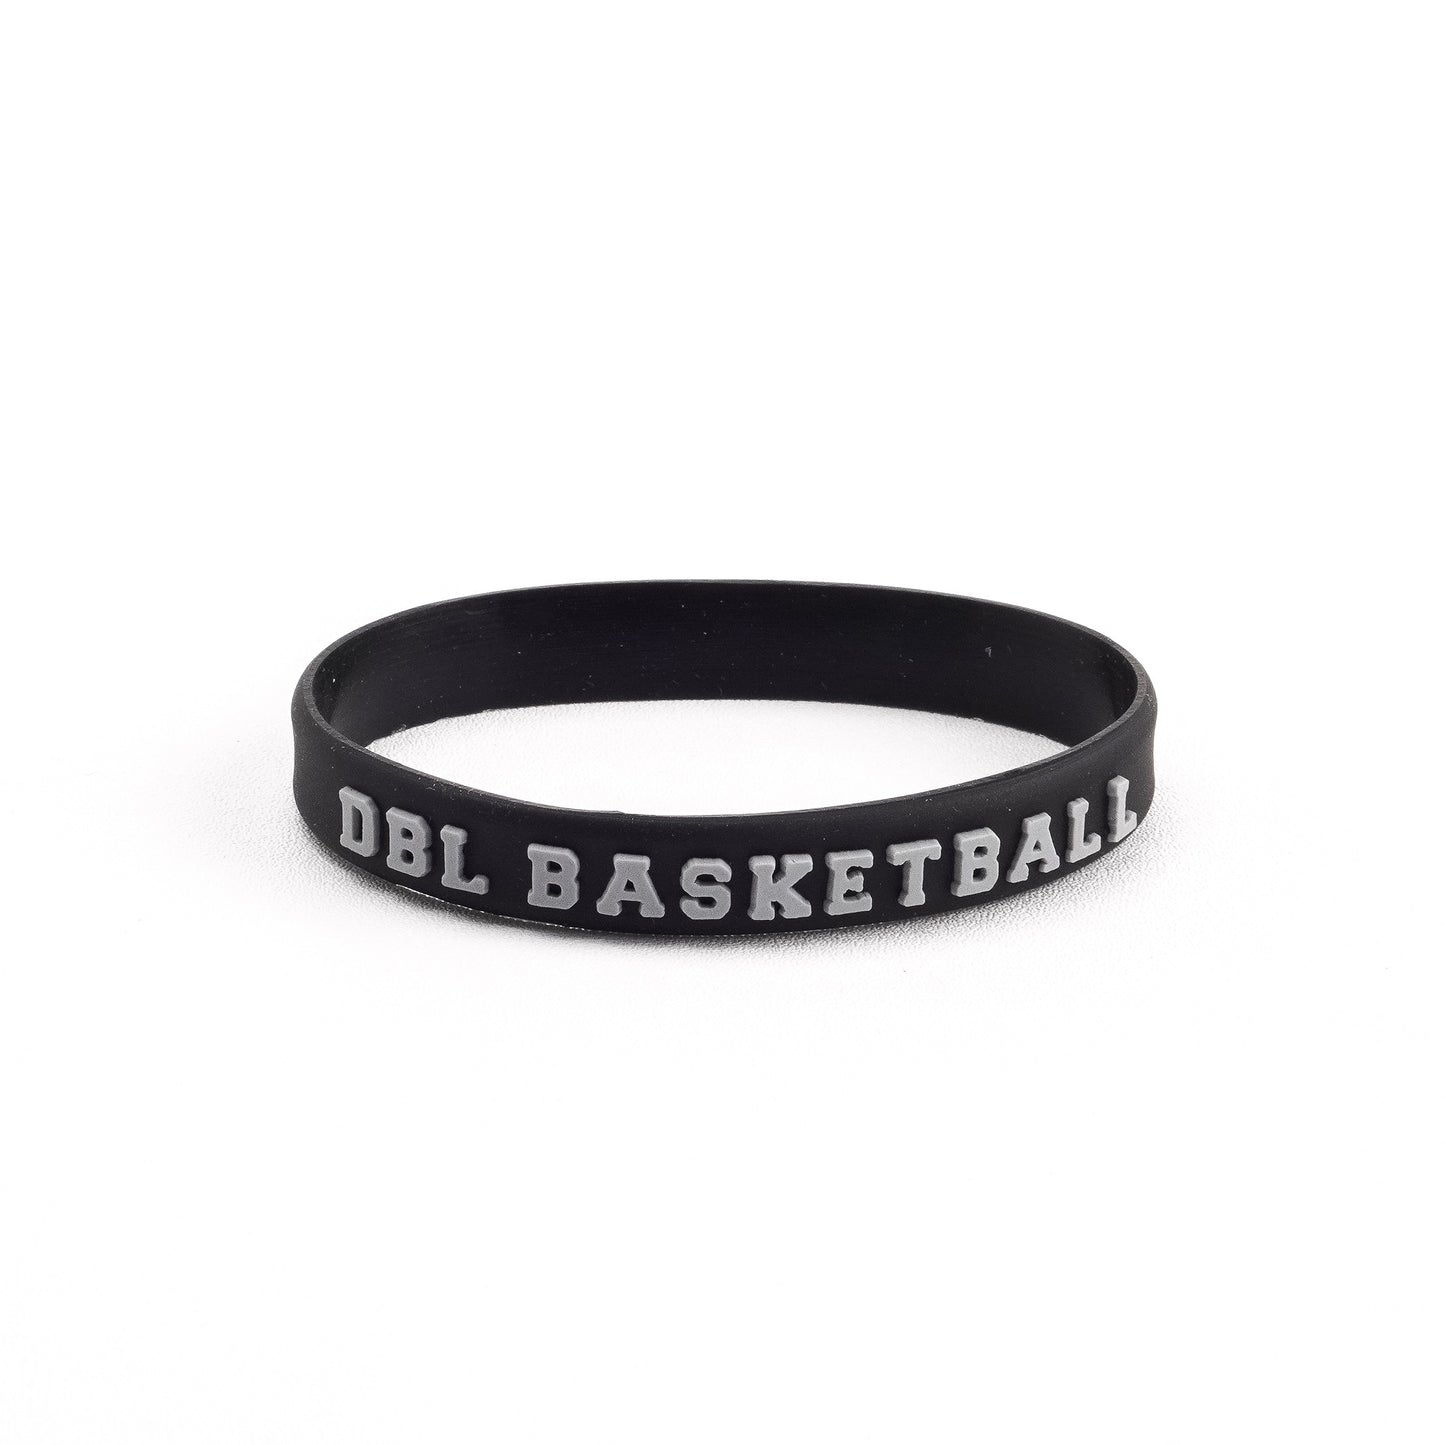 AZA x DBL Basketball Baller ID (Gelang Rubber Warna) - Black